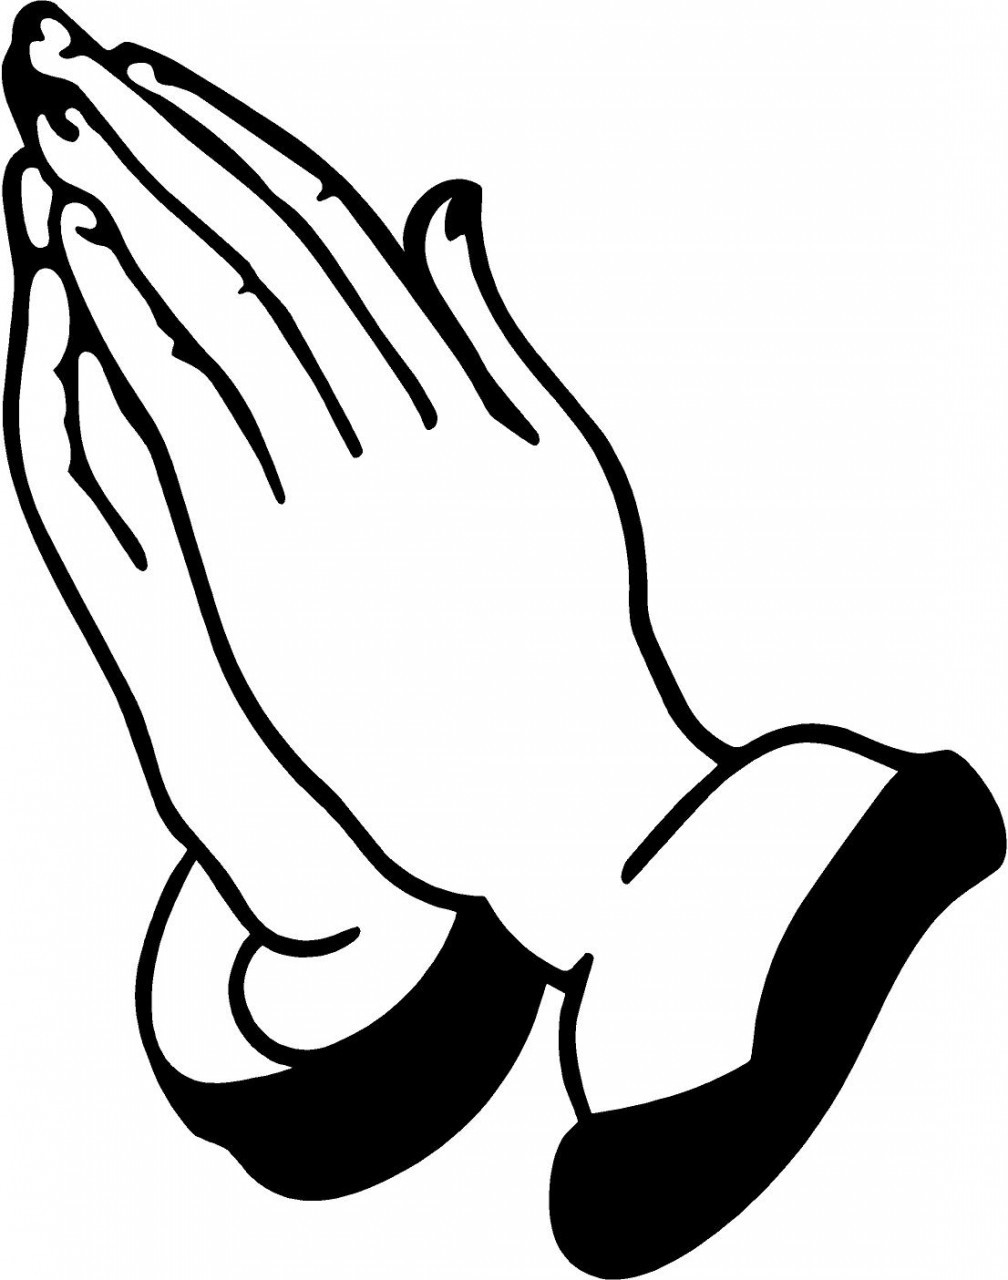 Praying Hands Praying Hand Child Prayer Hands Clipart